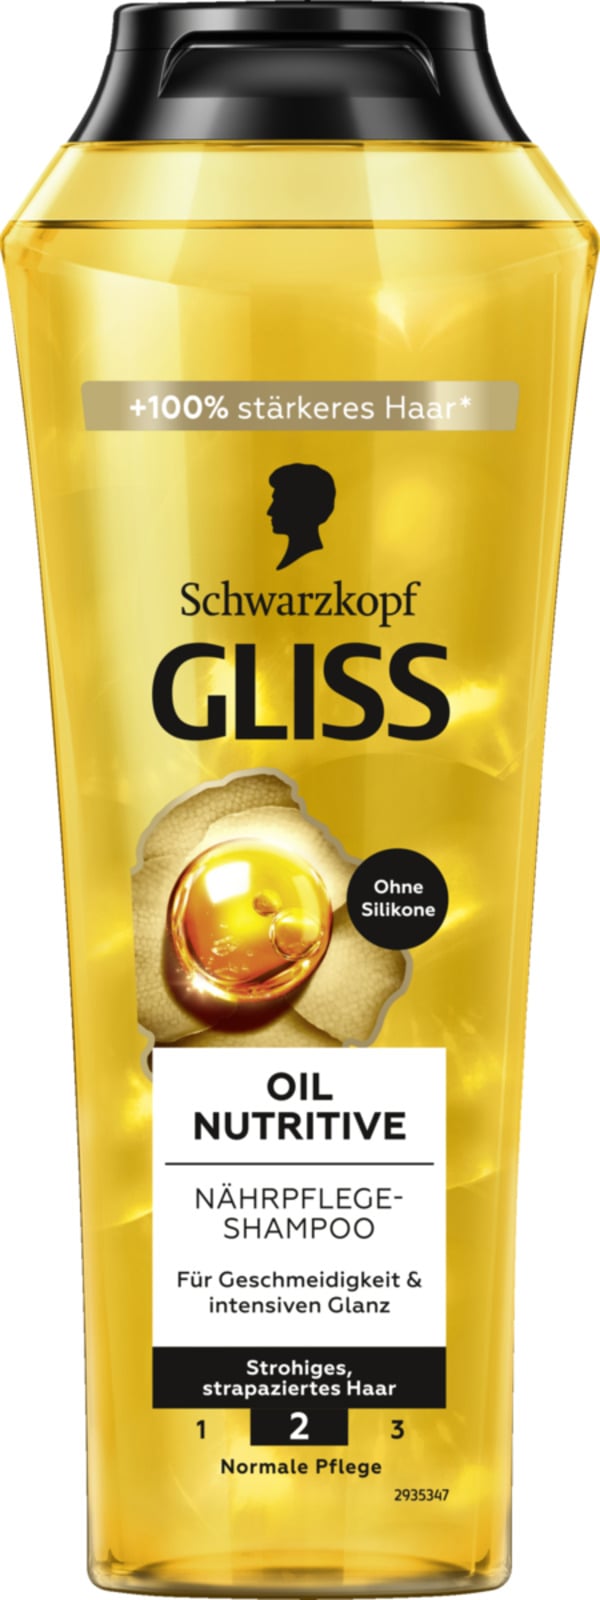 Bild 1 von Gliss Oil Nutritive Shampoo